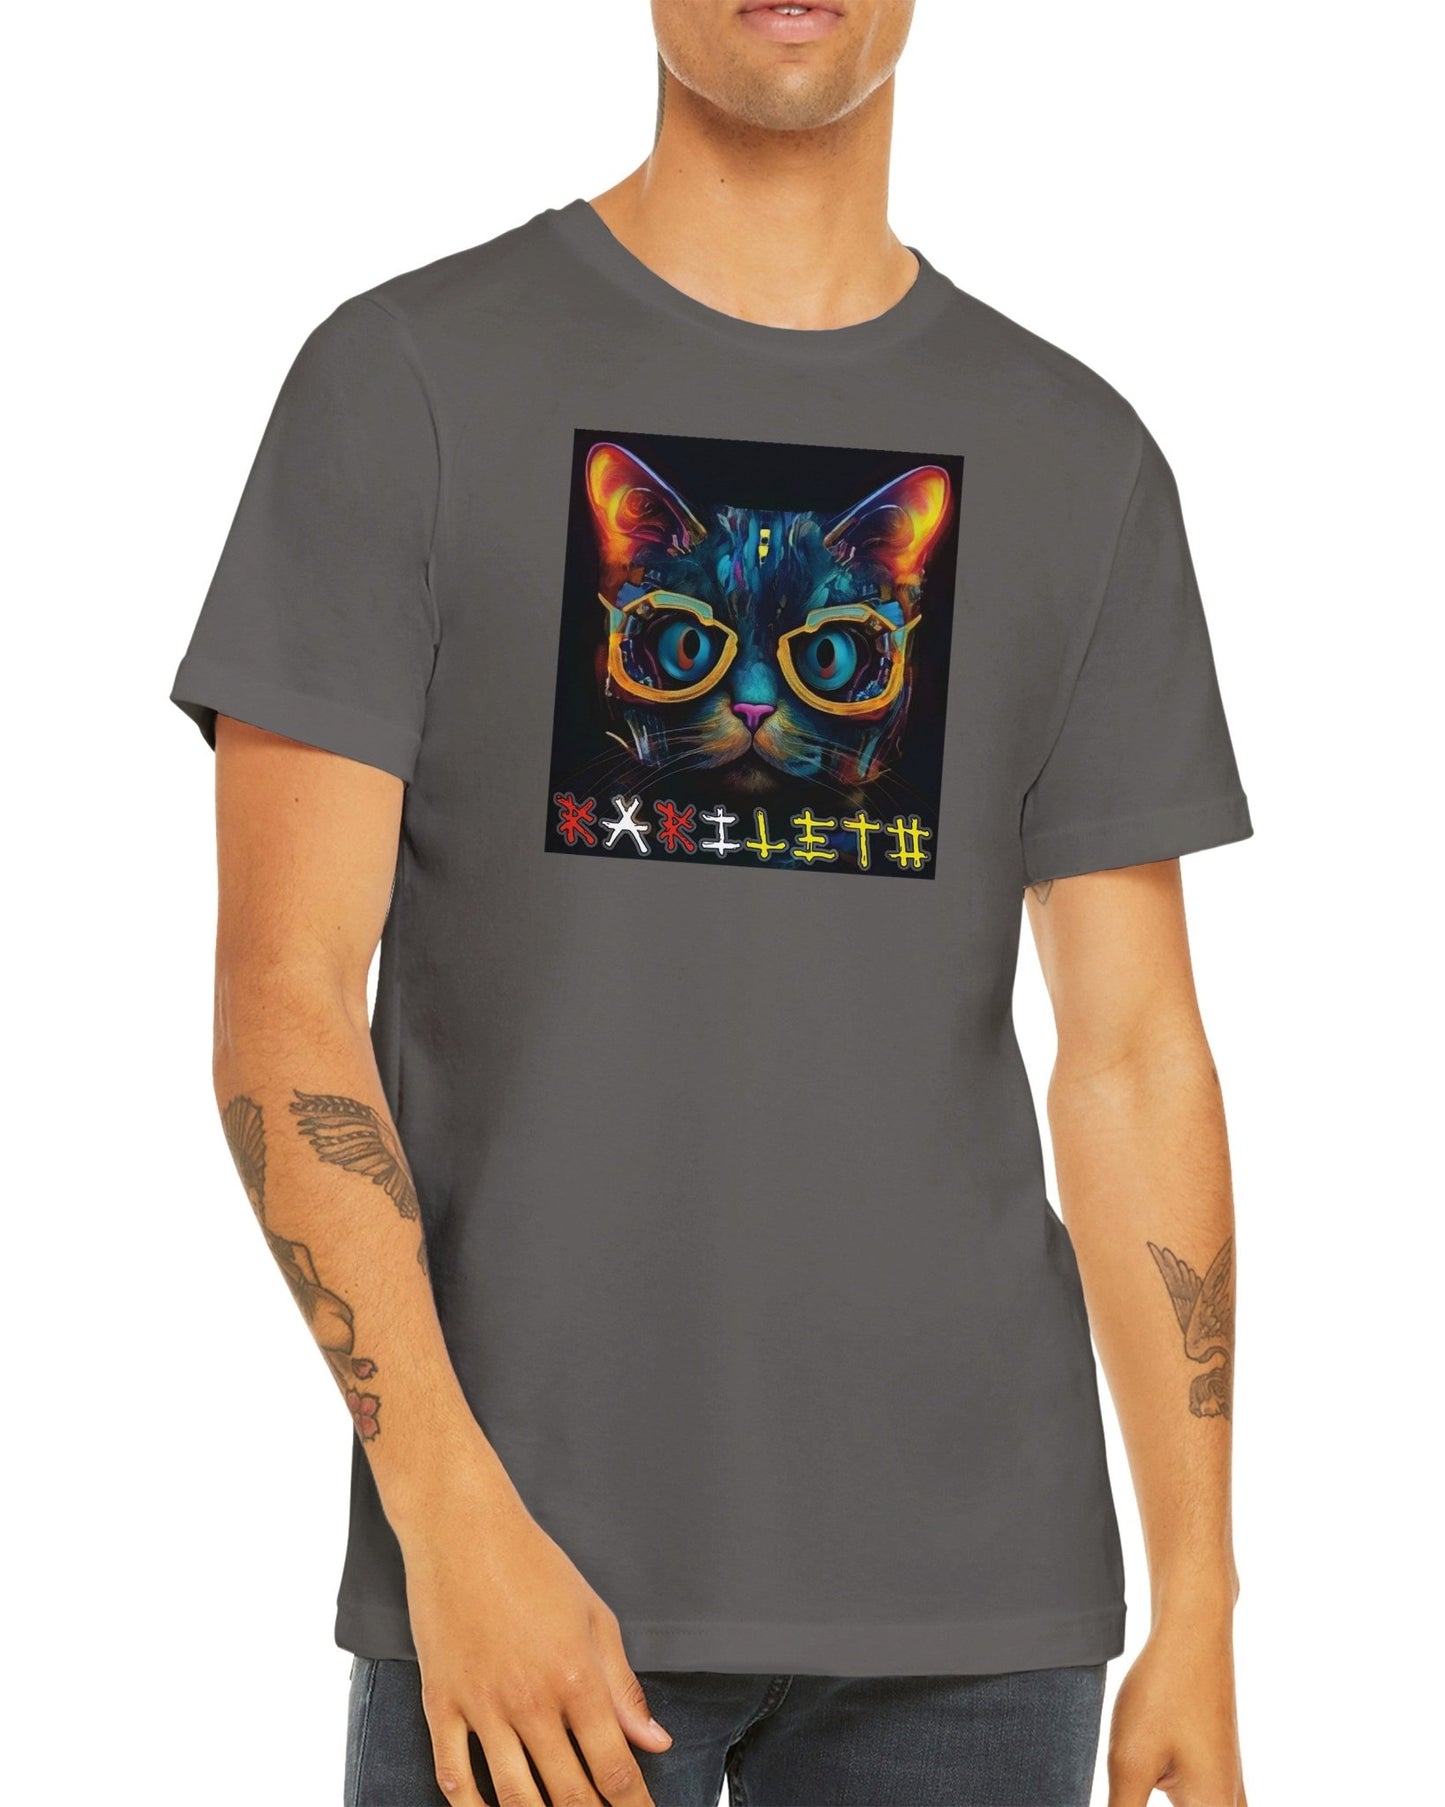 GLOWING CAT Premium Crewneck T-Shirt - Rarileto